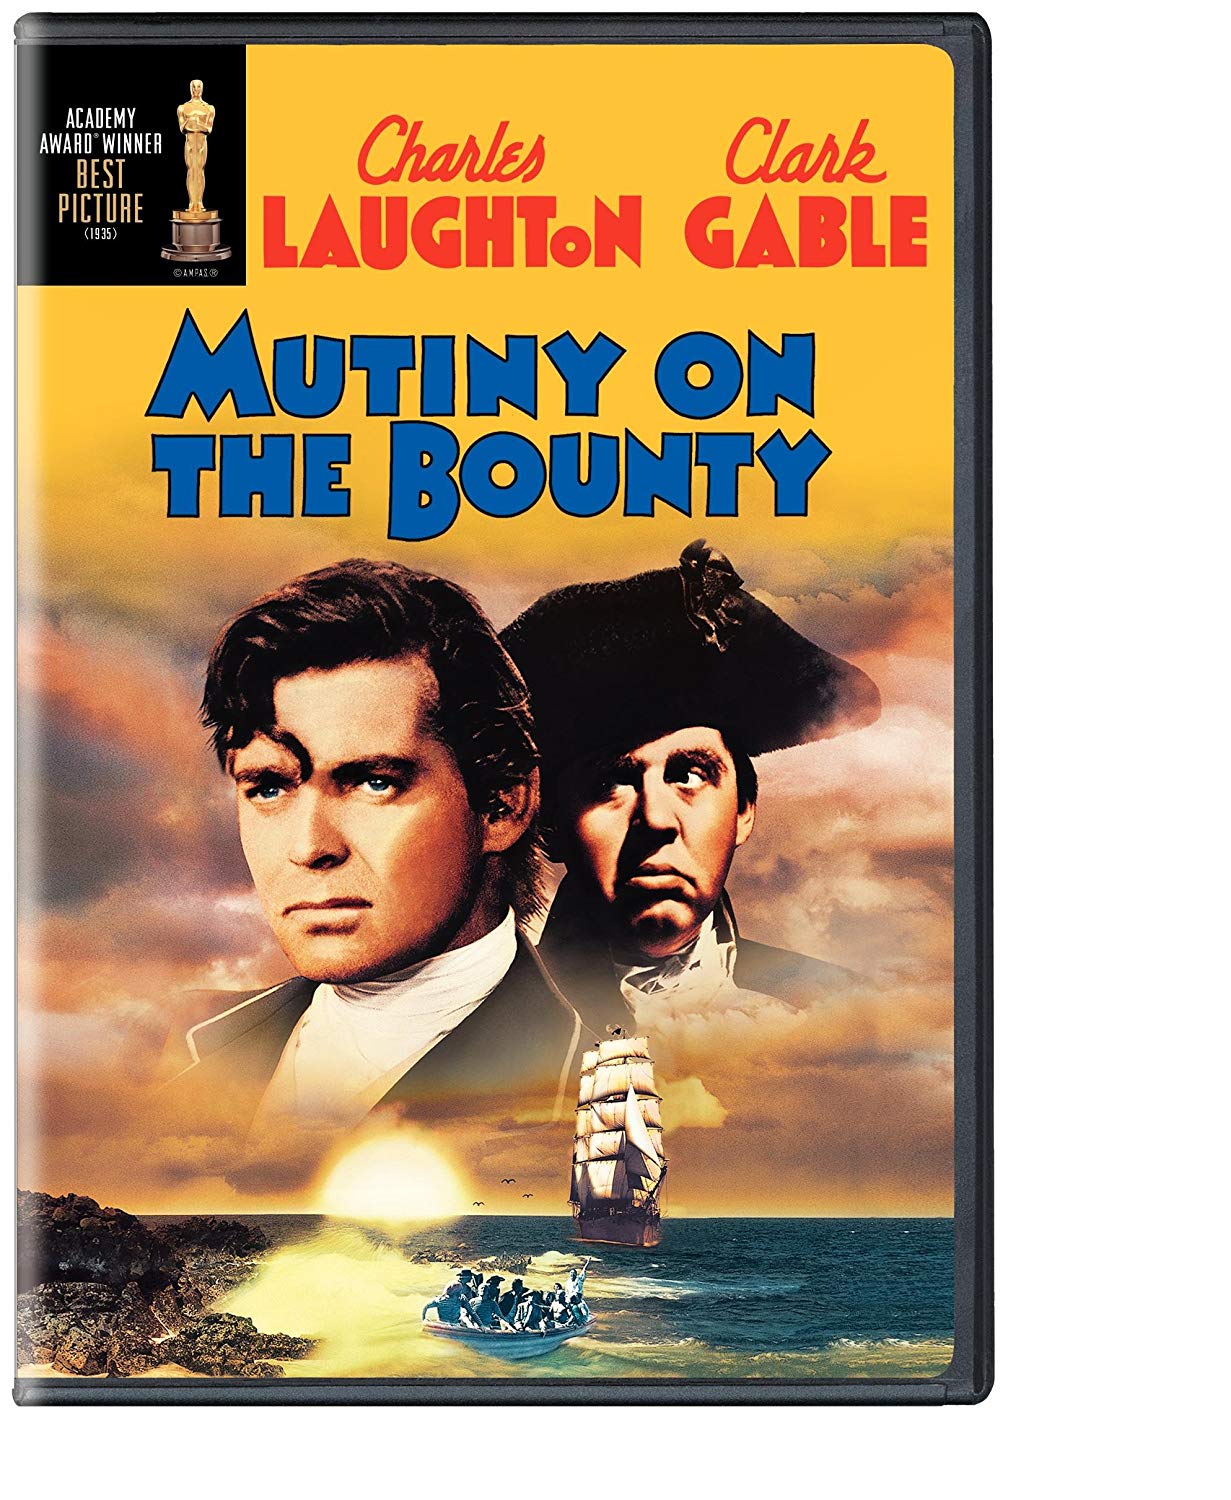 Mutiny on the Bounty (1935), starring Charles Laughton, Clark Gable